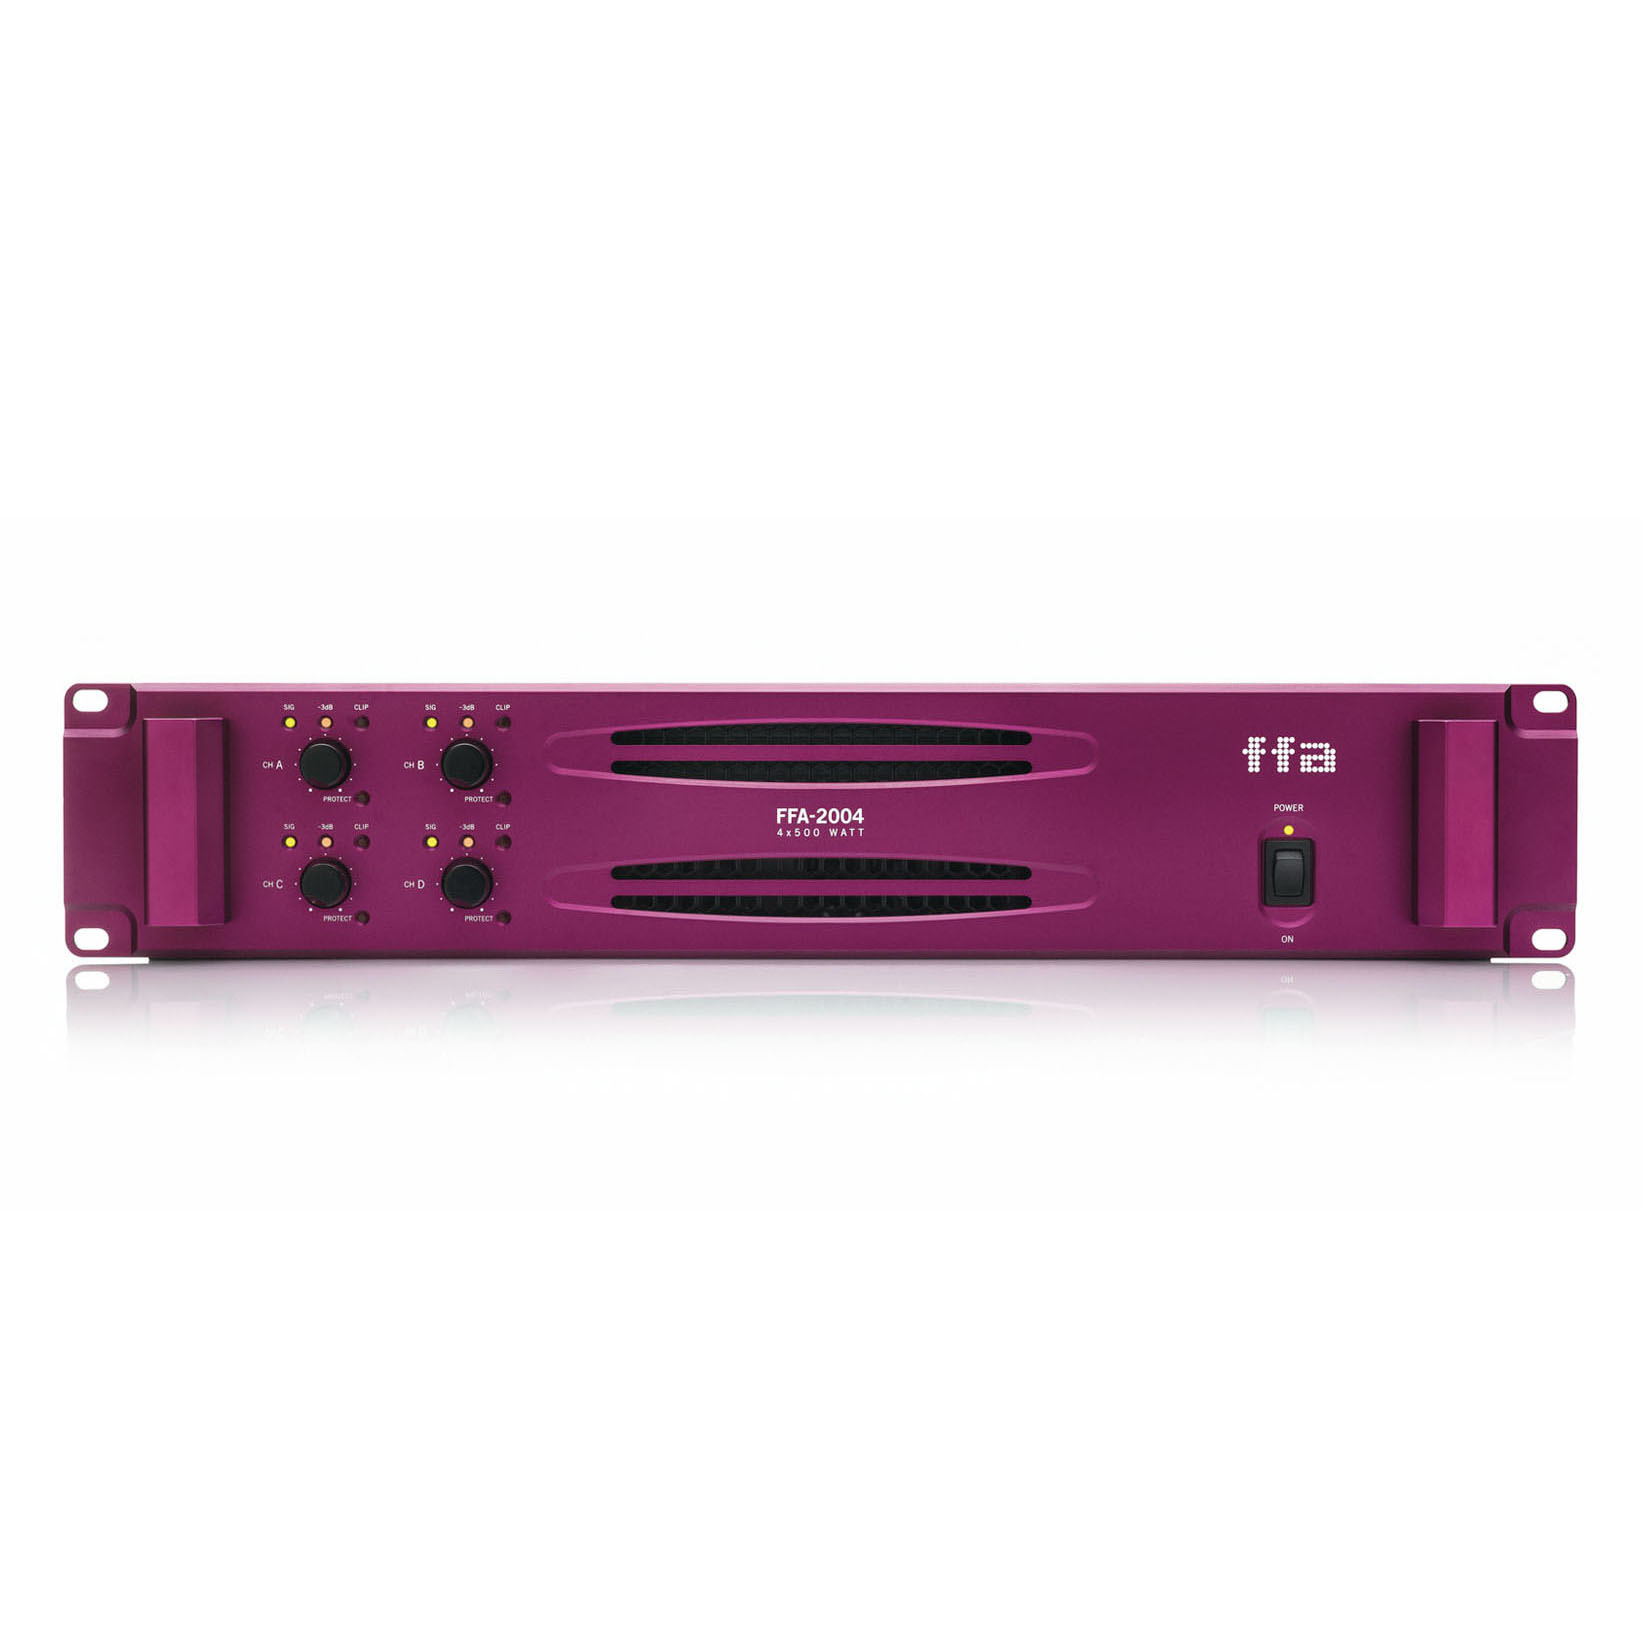 FFA-2004 G3 DSP Full Fat Audio Amplifier